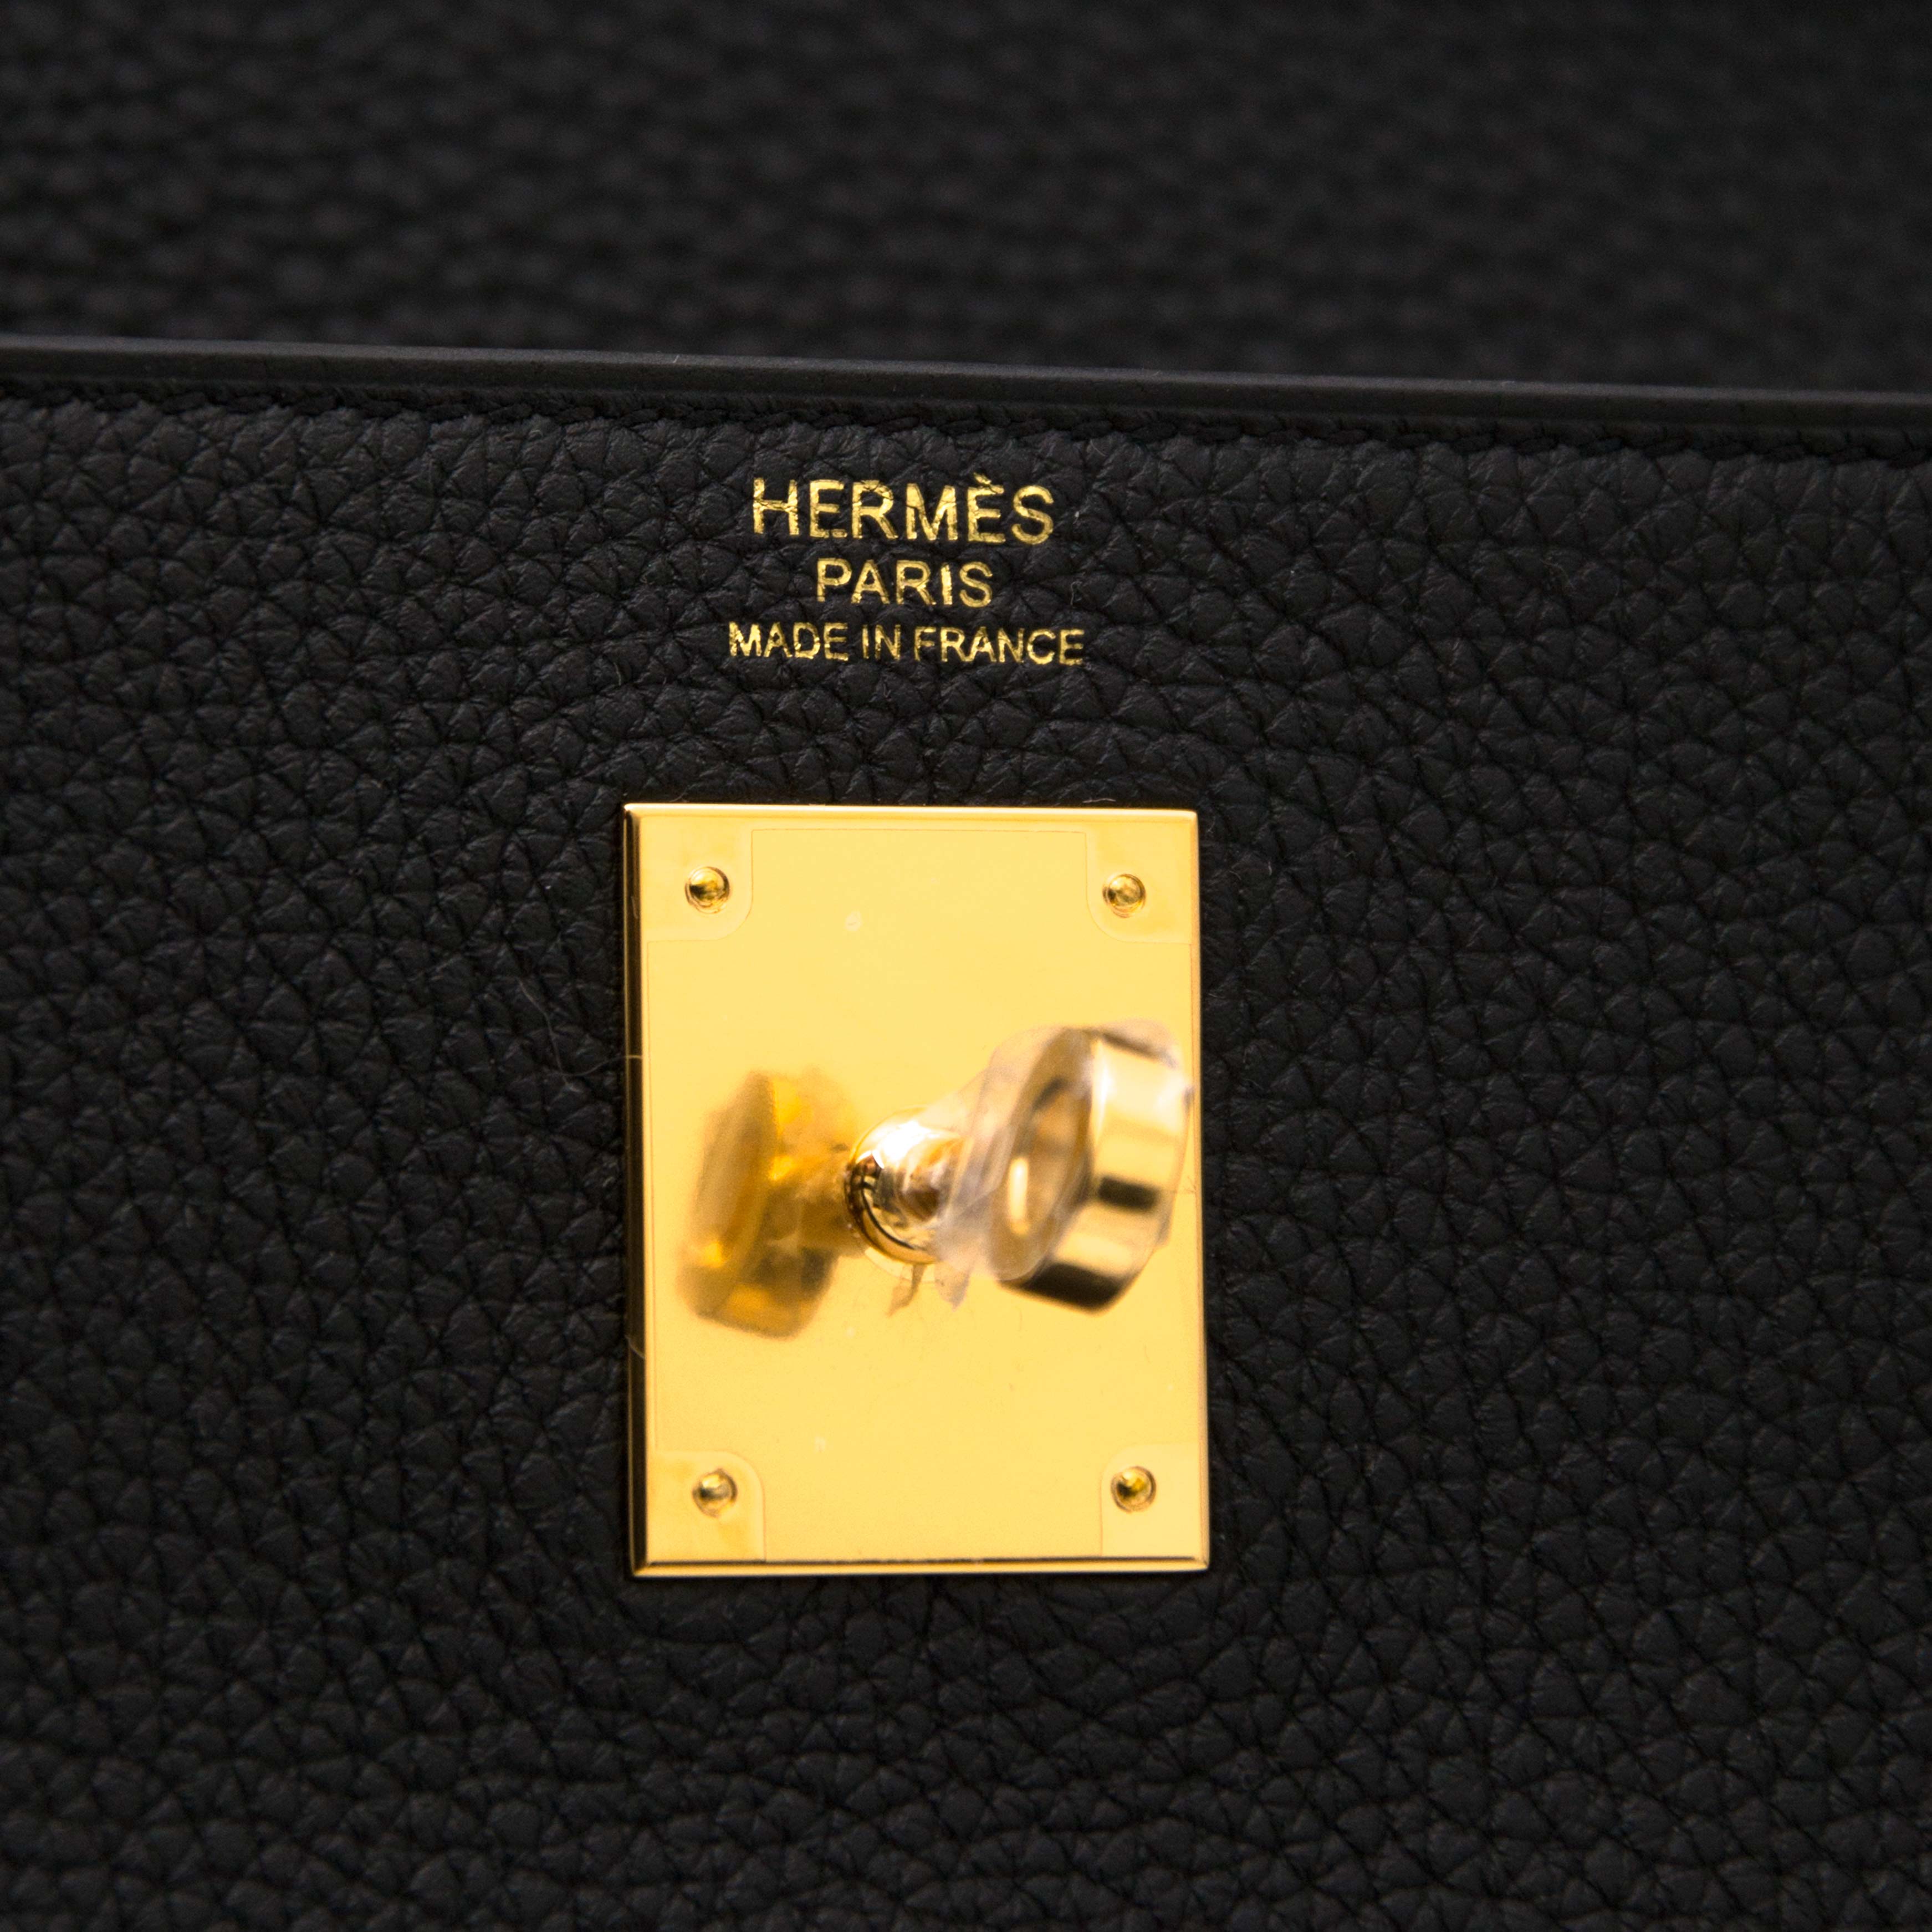 Kelly 32 cloth handbag Hermès Black in Cloth - 35802434